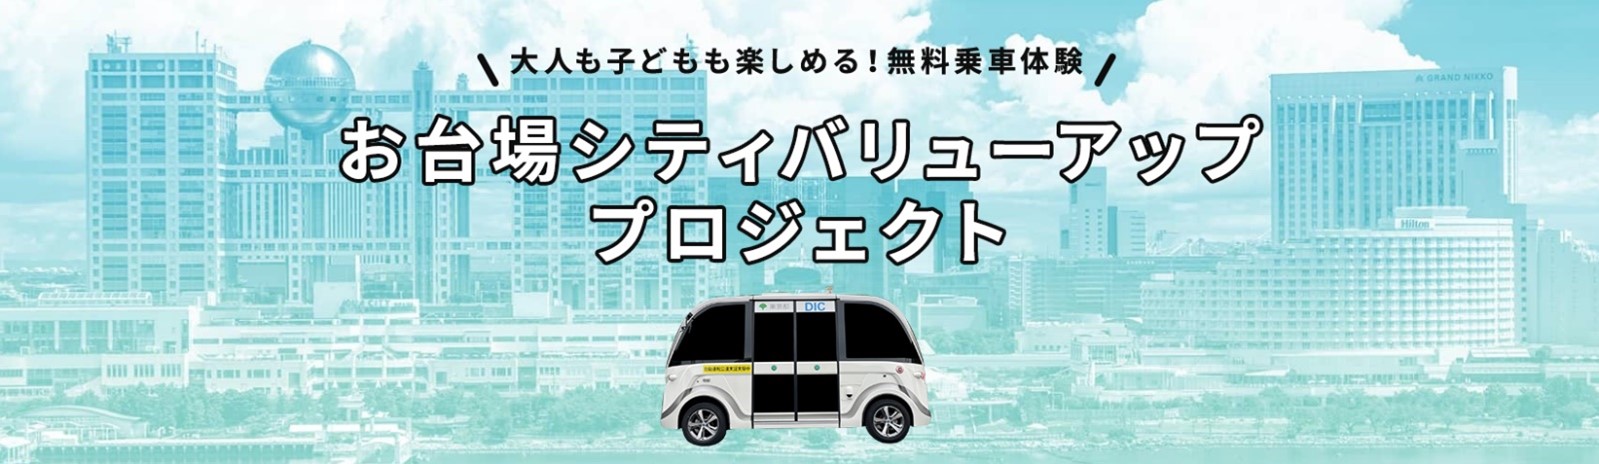 WILLER:臨海副都心での自動運転体験イベント「未来を乗りにおいでよ。次世代モビリティのまち体験」において、 コンパクトな自動運転EVバスによる「お台場シティバリューアッププロジェクト」を始動